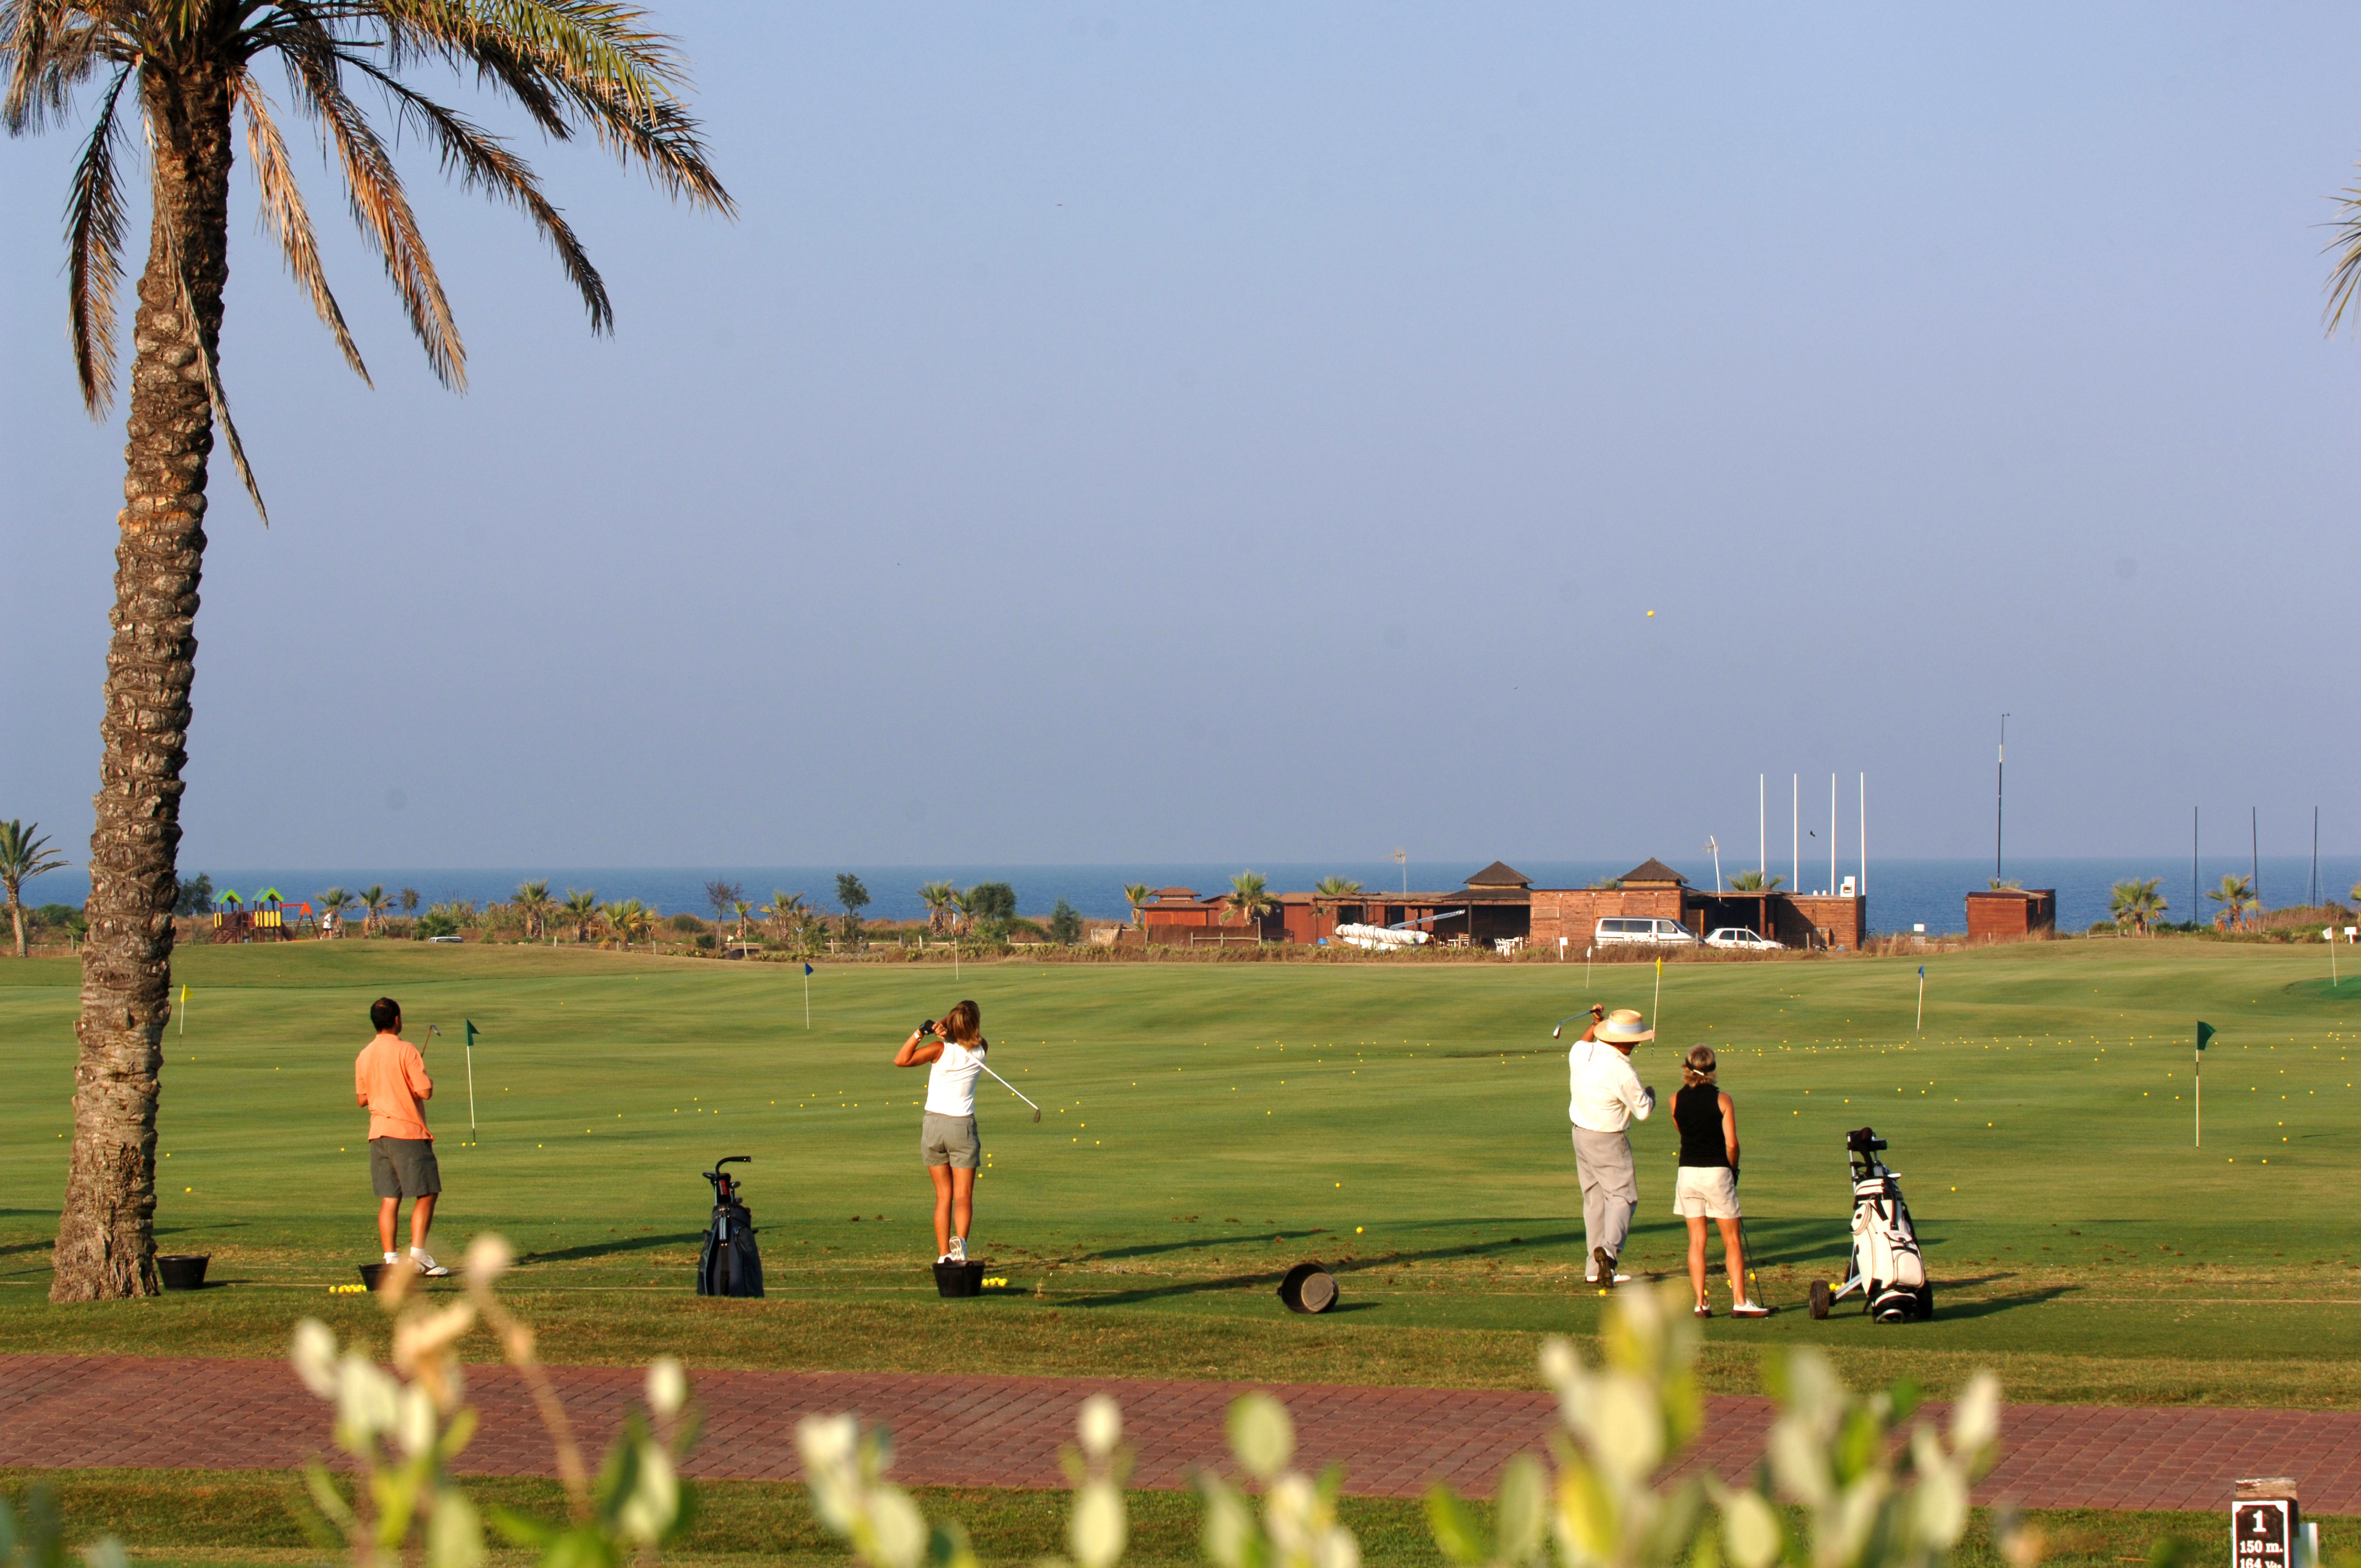 Barceló Costa Ballena Golf & Spa